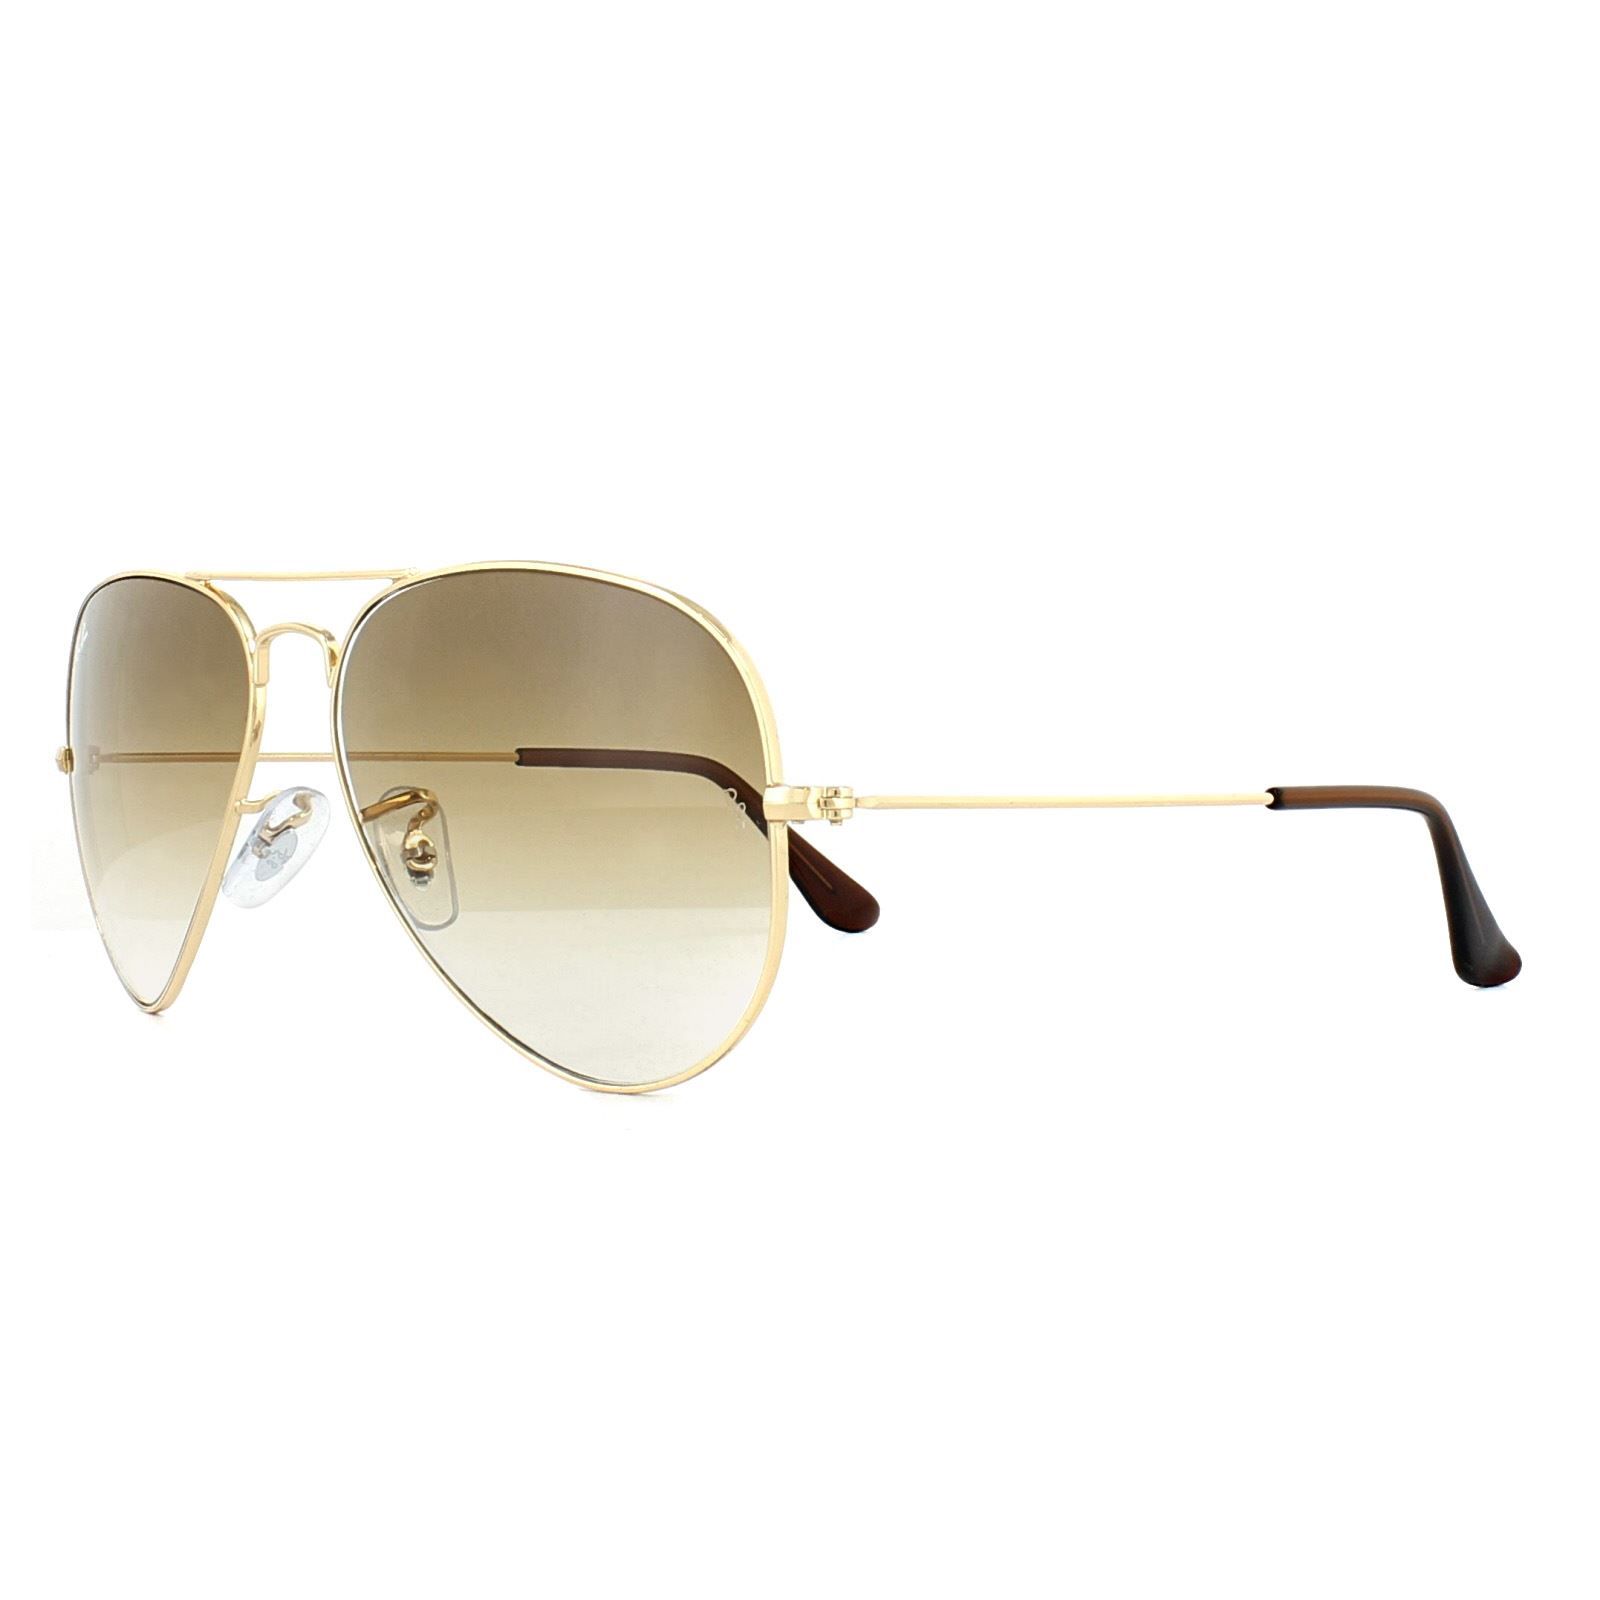 Ray-Ban Sunglasses Aviator 3025 001/51 Gold Brown Shade